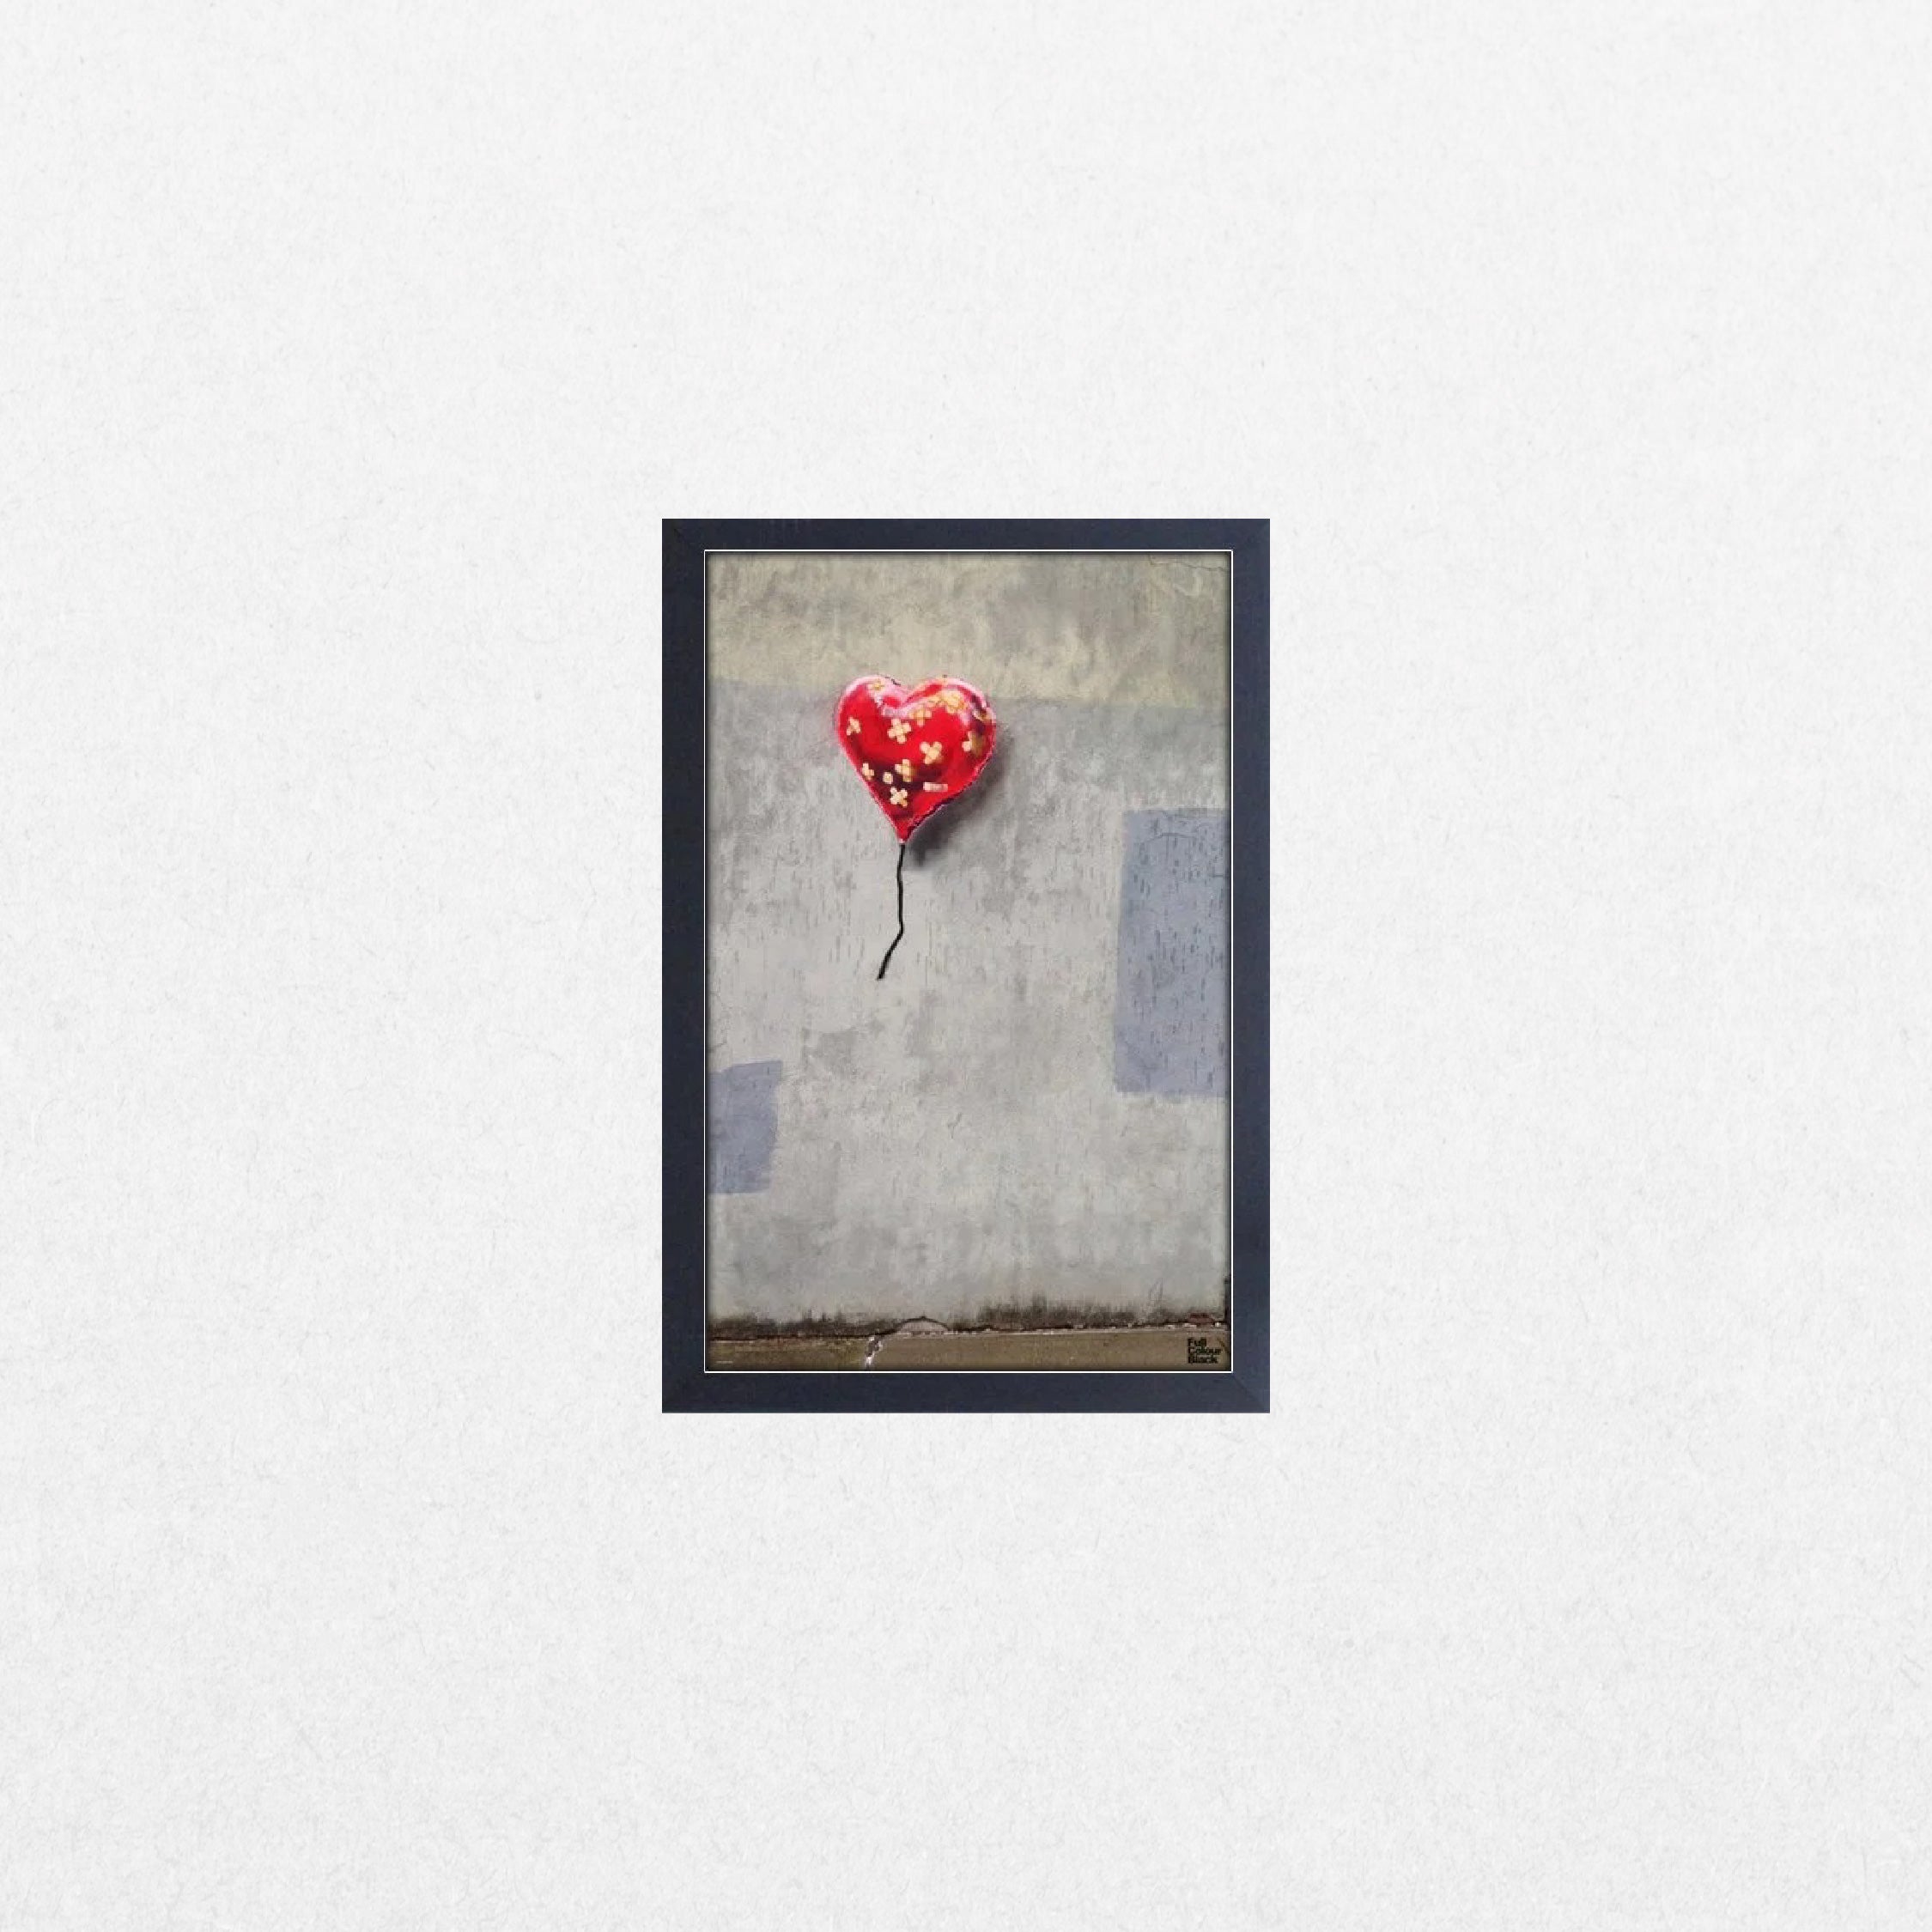 Banksy - Bandaged Heart, 2013